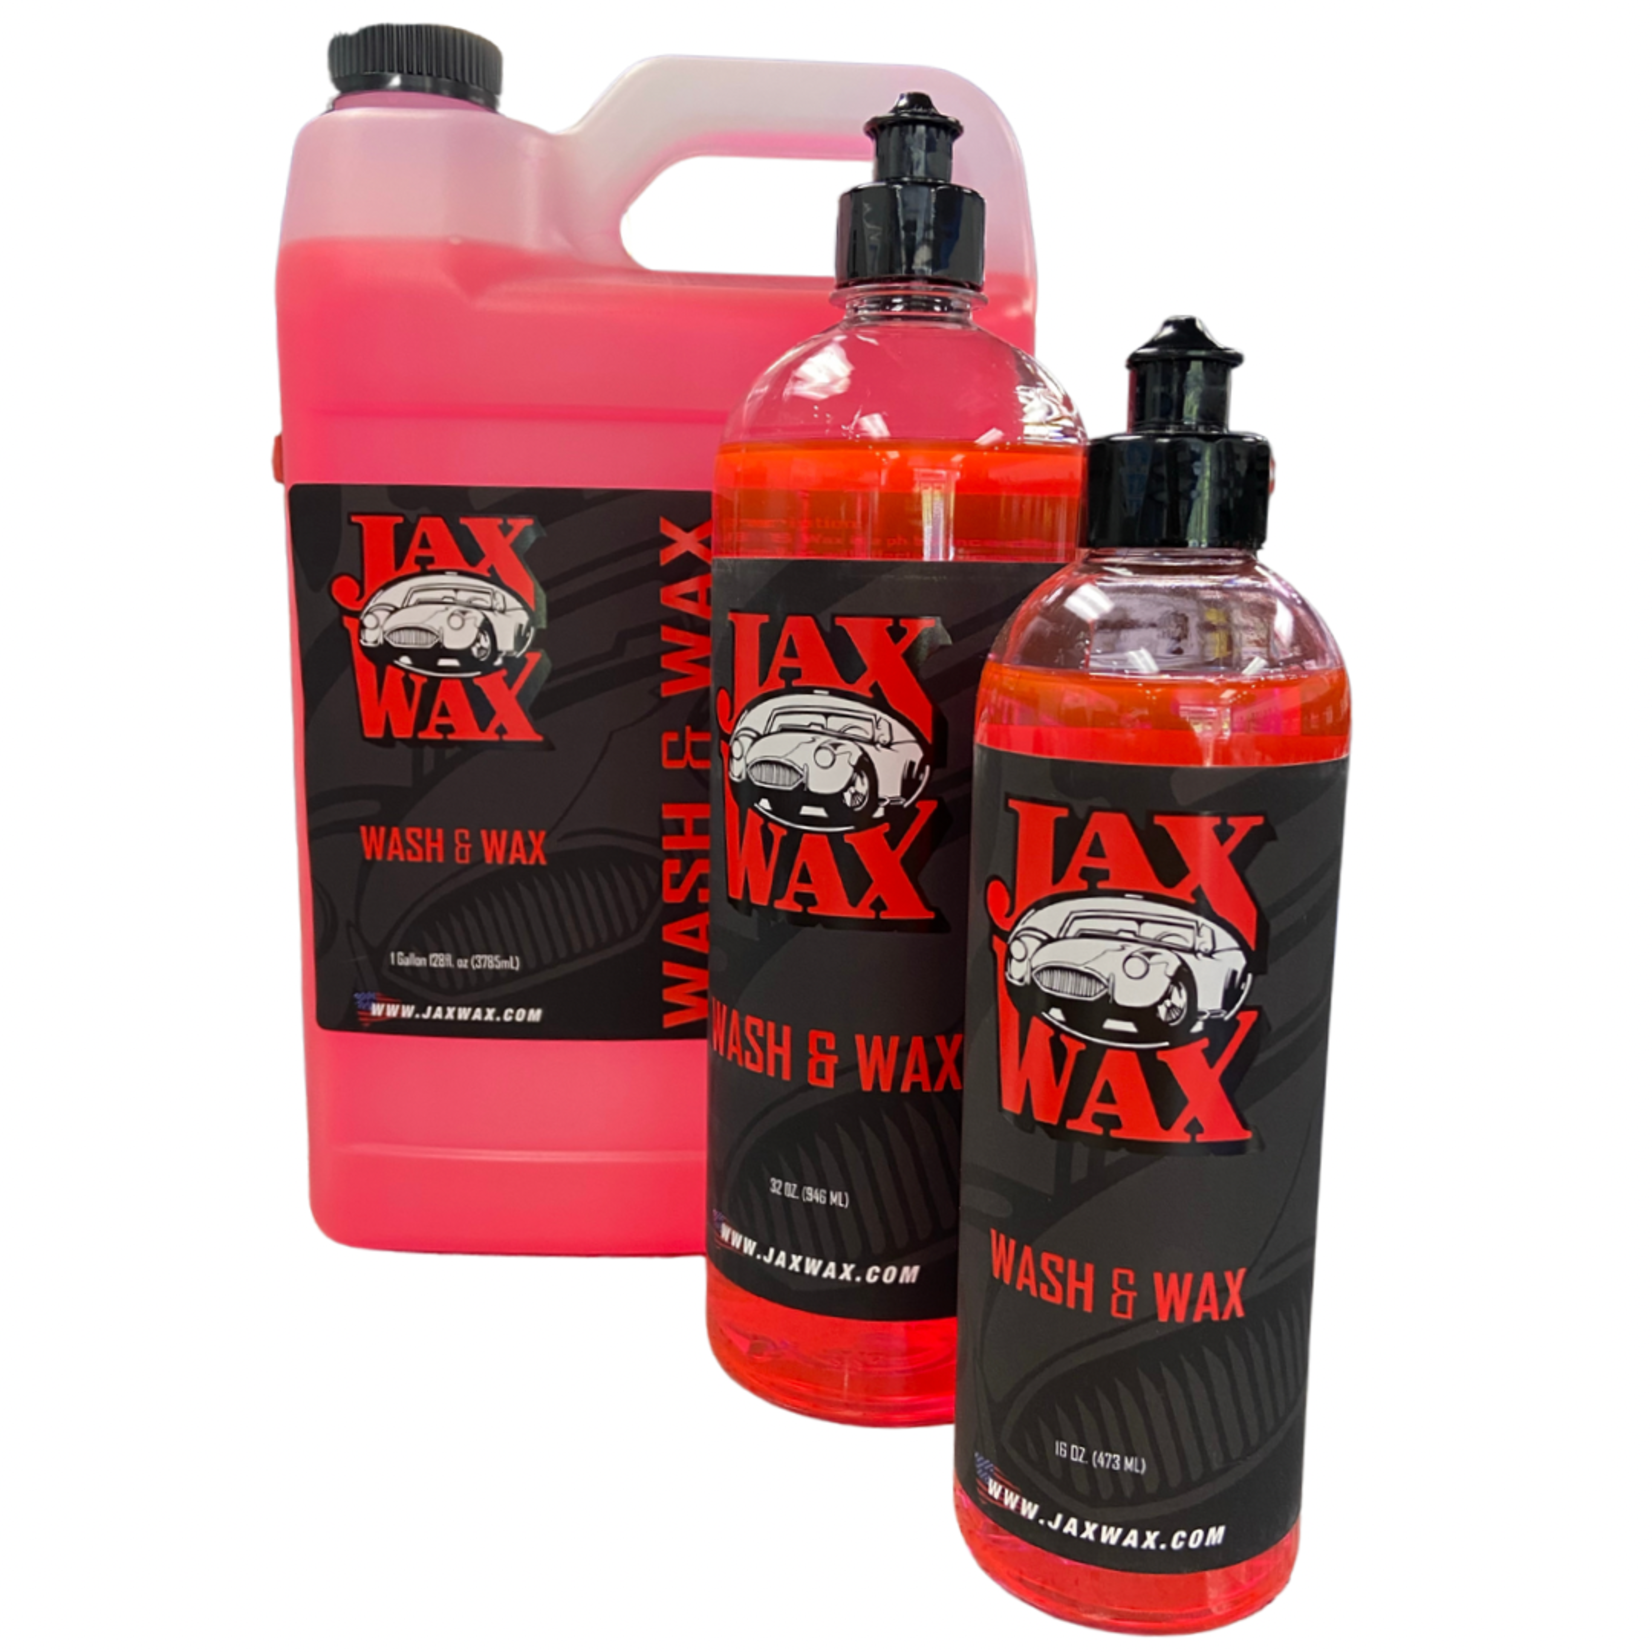 Jax Wax Exterior Detail Car Care Kit 32 Oz